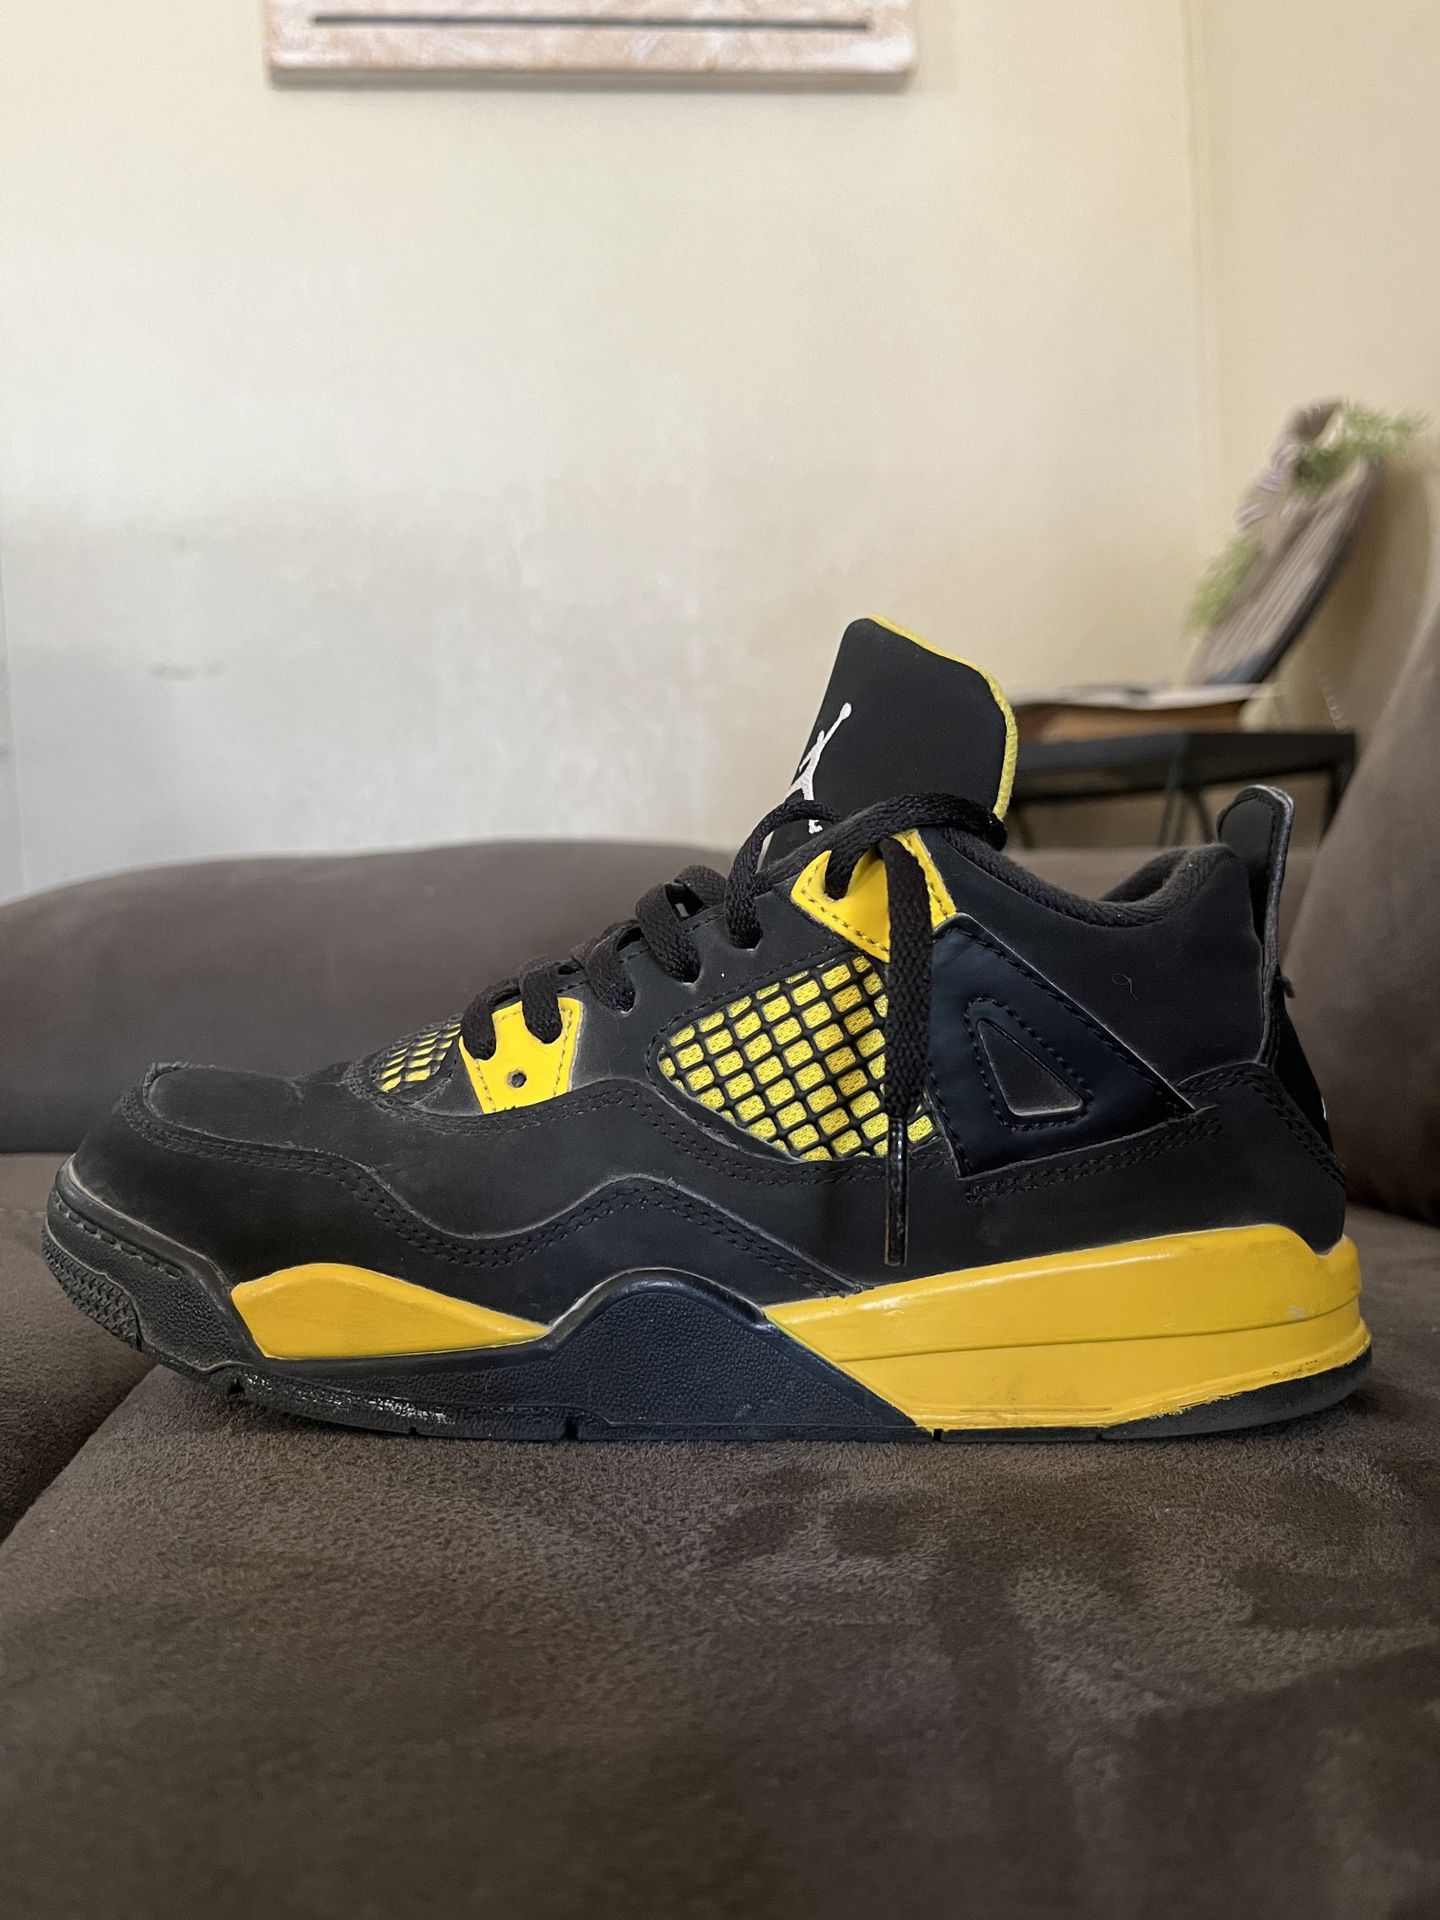 Jordan 4s. Yellow Thunder size 2.5Y